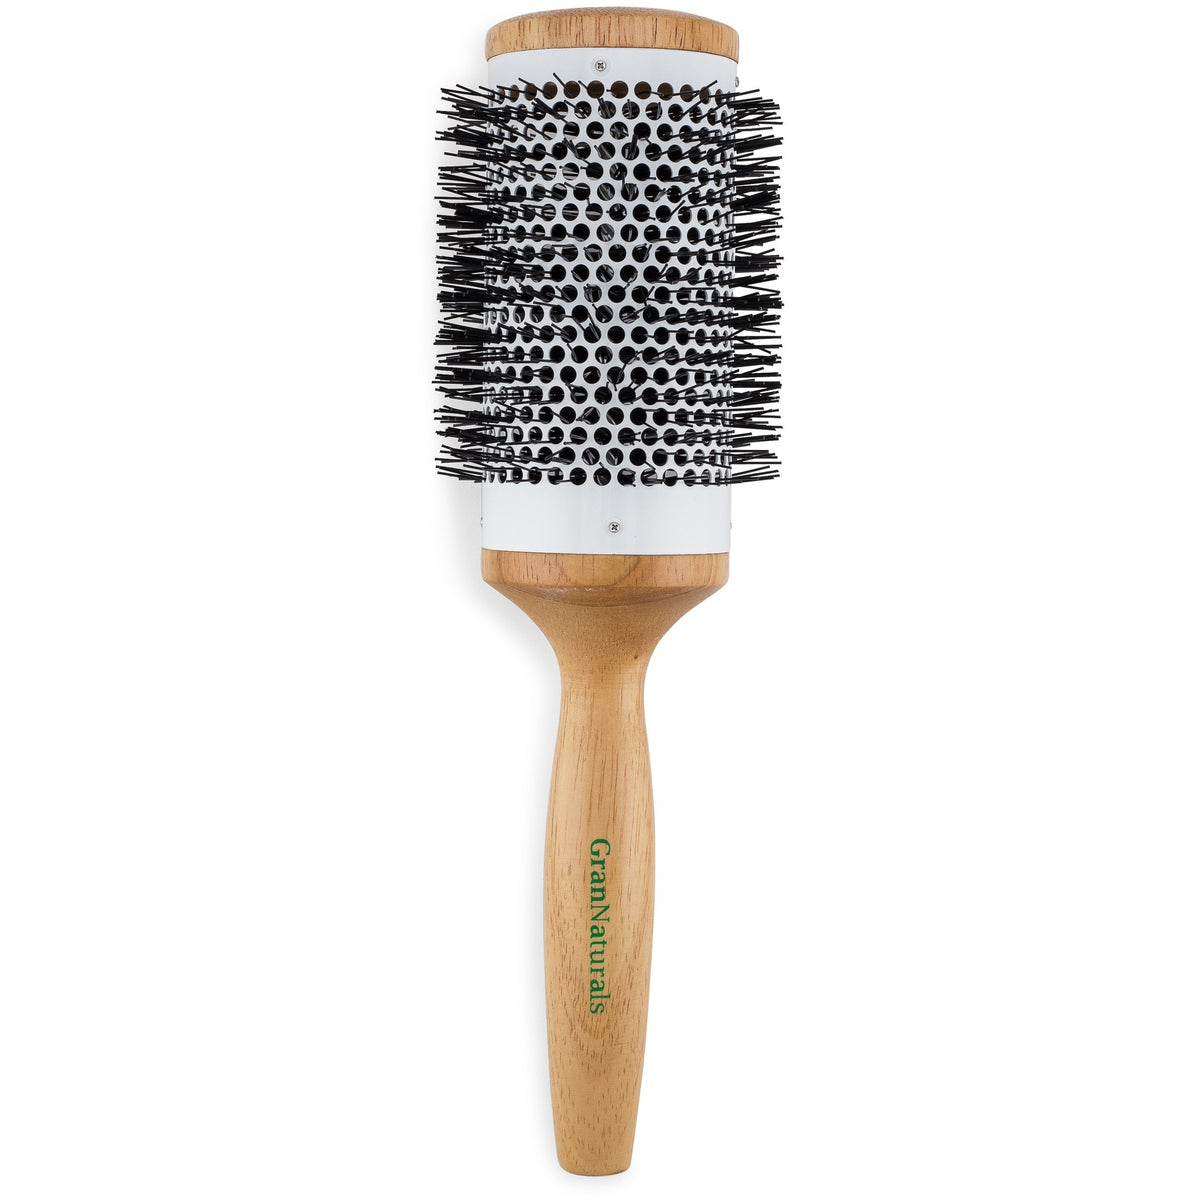 Best Best Round Brush For Fine Hair Blowout Uk for Short Hair